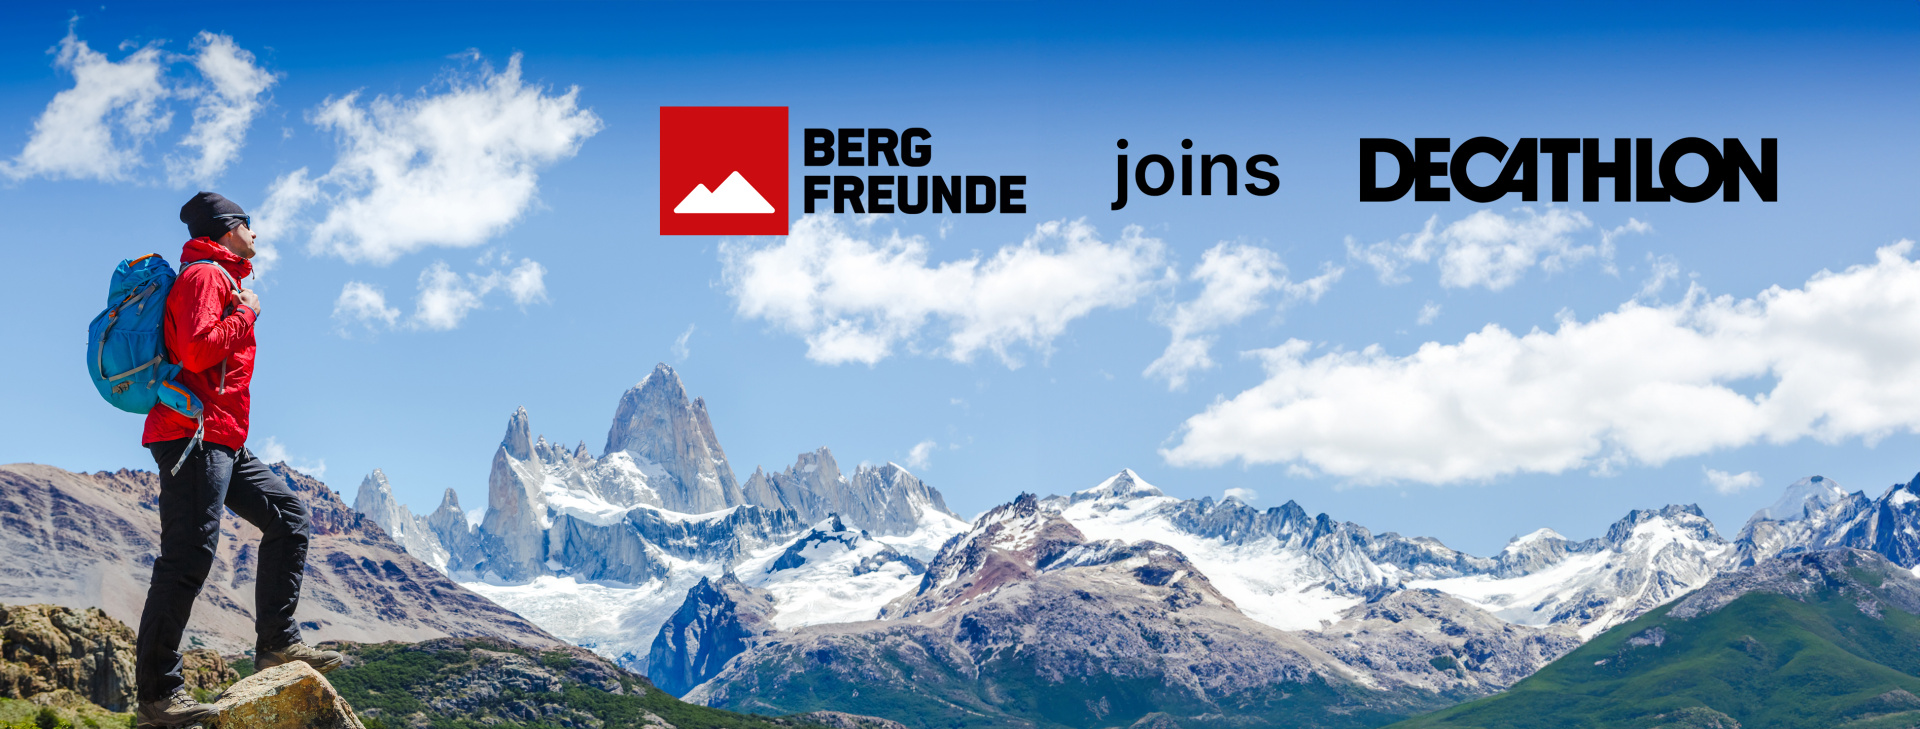 Decathlon to buy German online retailer Bergfreunde - Inside